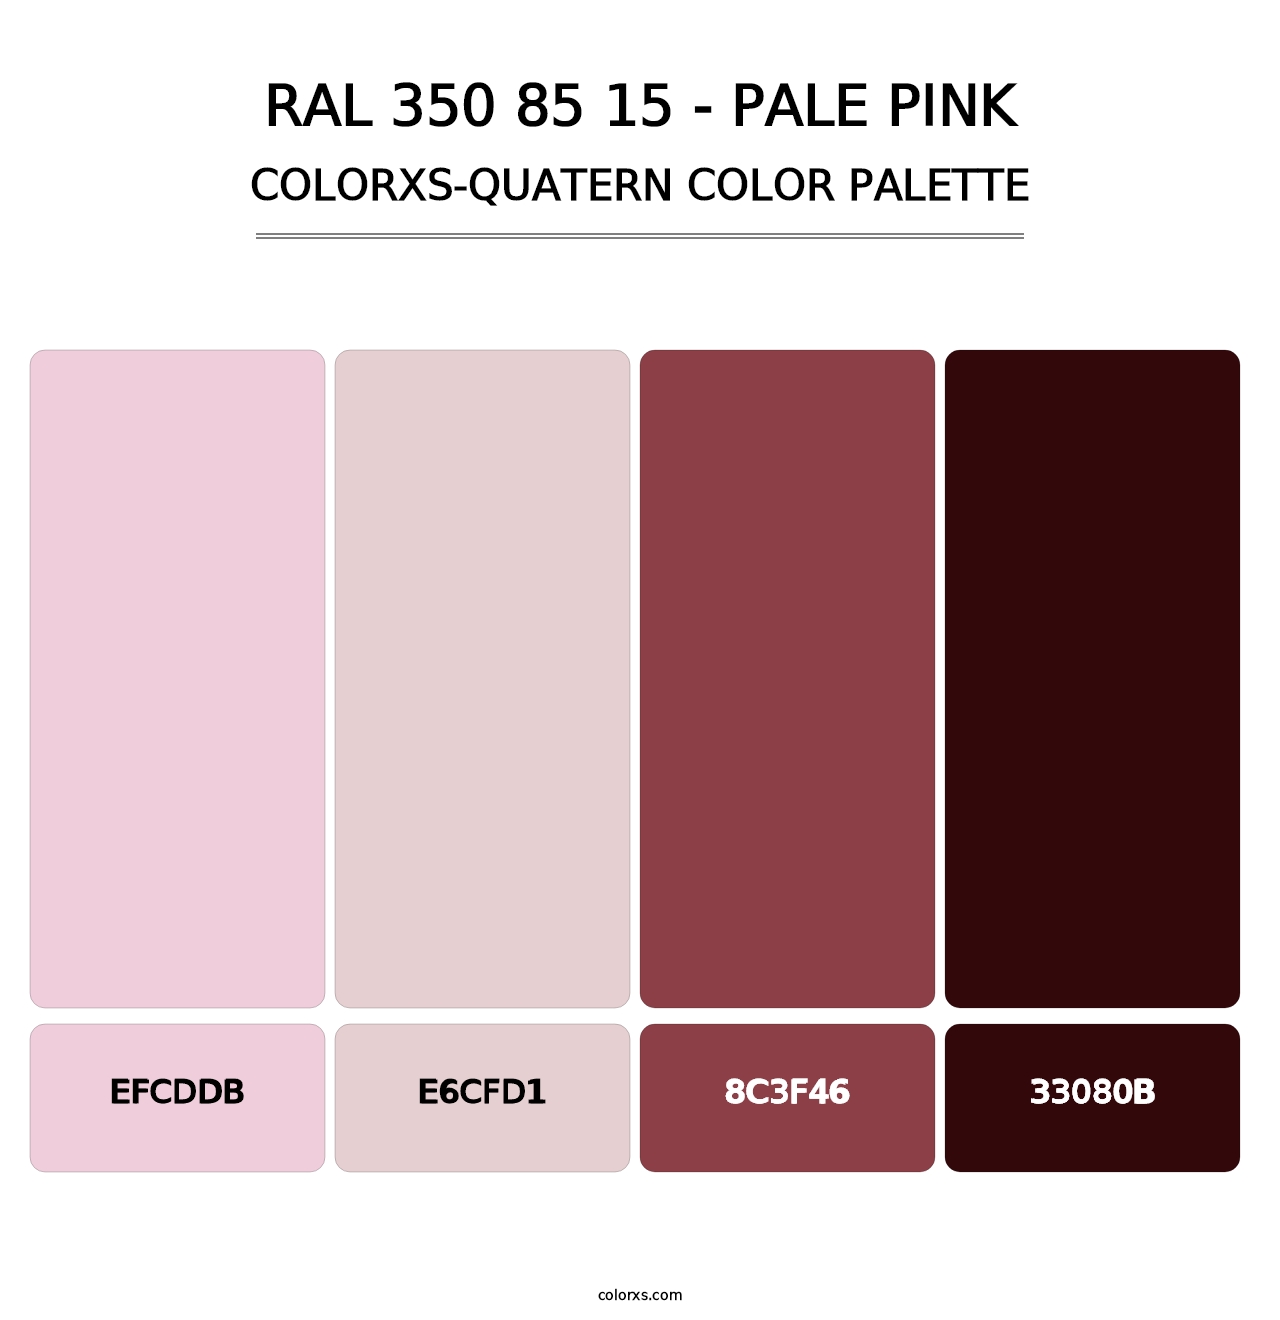 RAL 350 85 15 - Pale Pink - Colorxs Quatern Palette